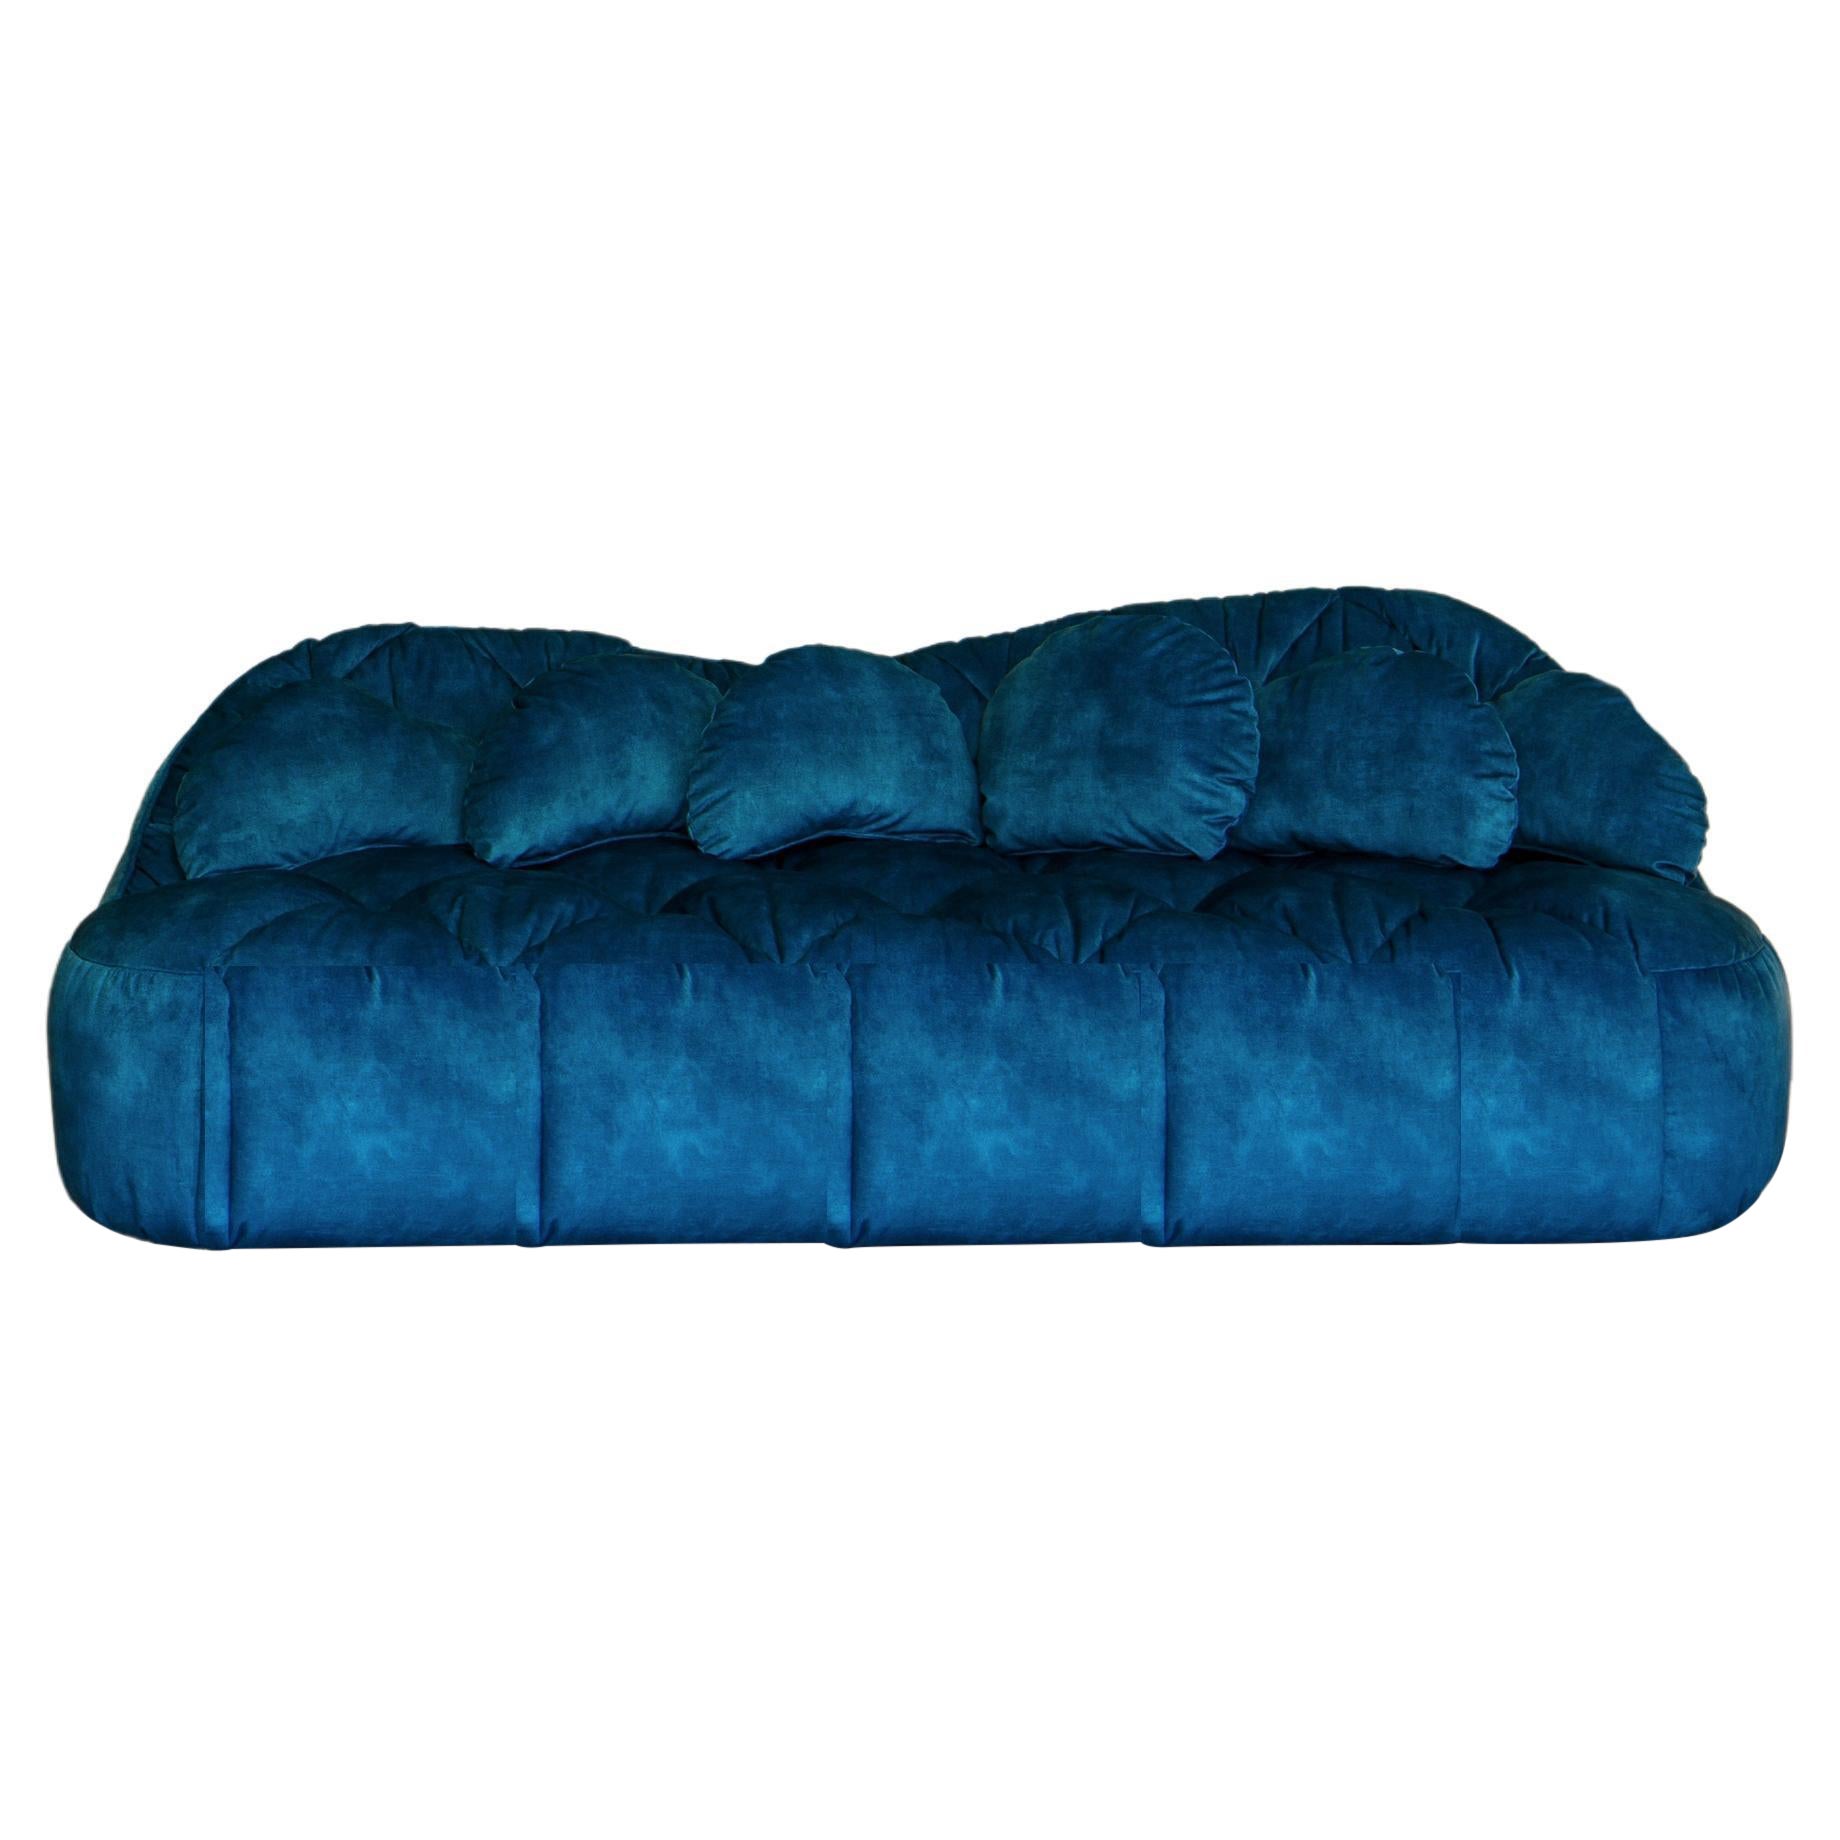 Cormor Sofa by Delvis Unlimited